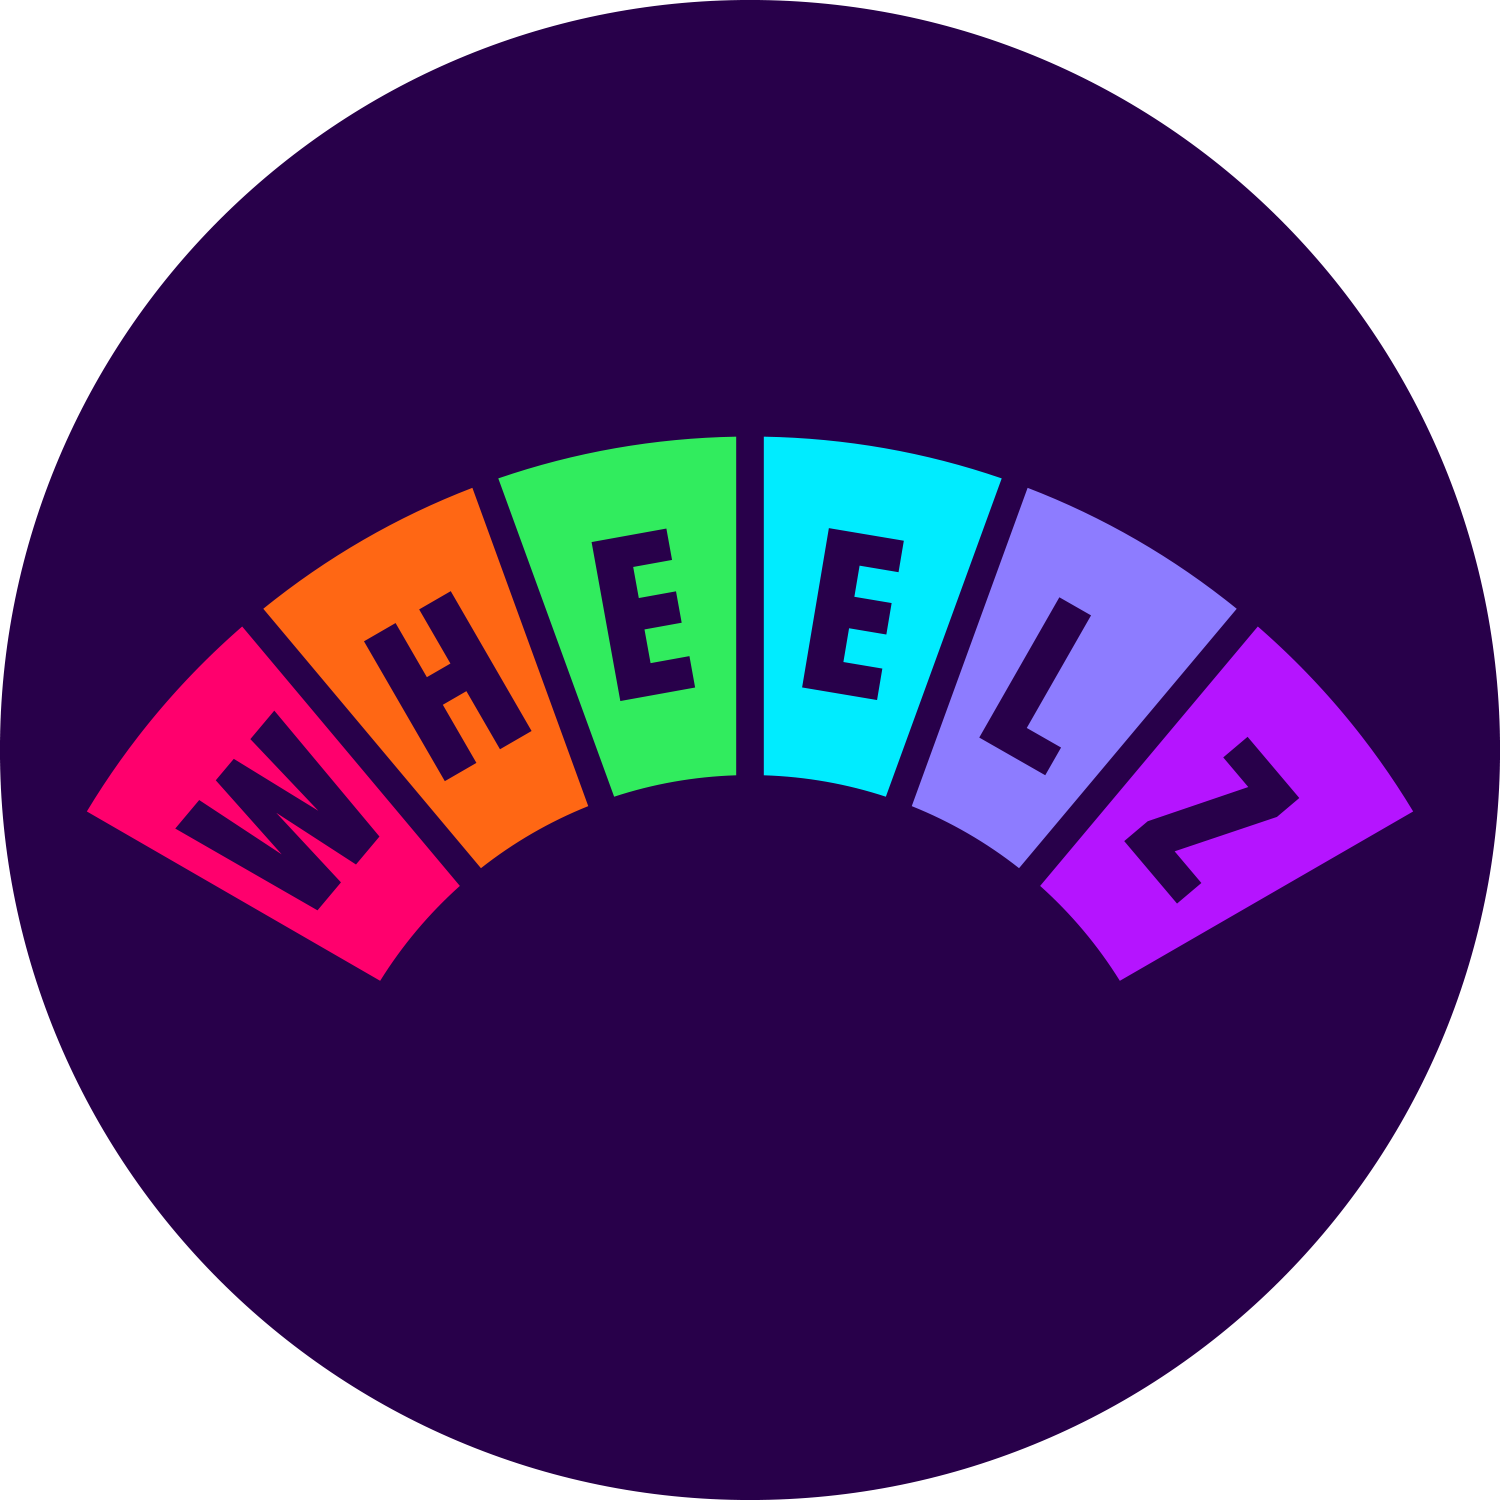 wheelz-round-logo_uid_601bd8521c108.png